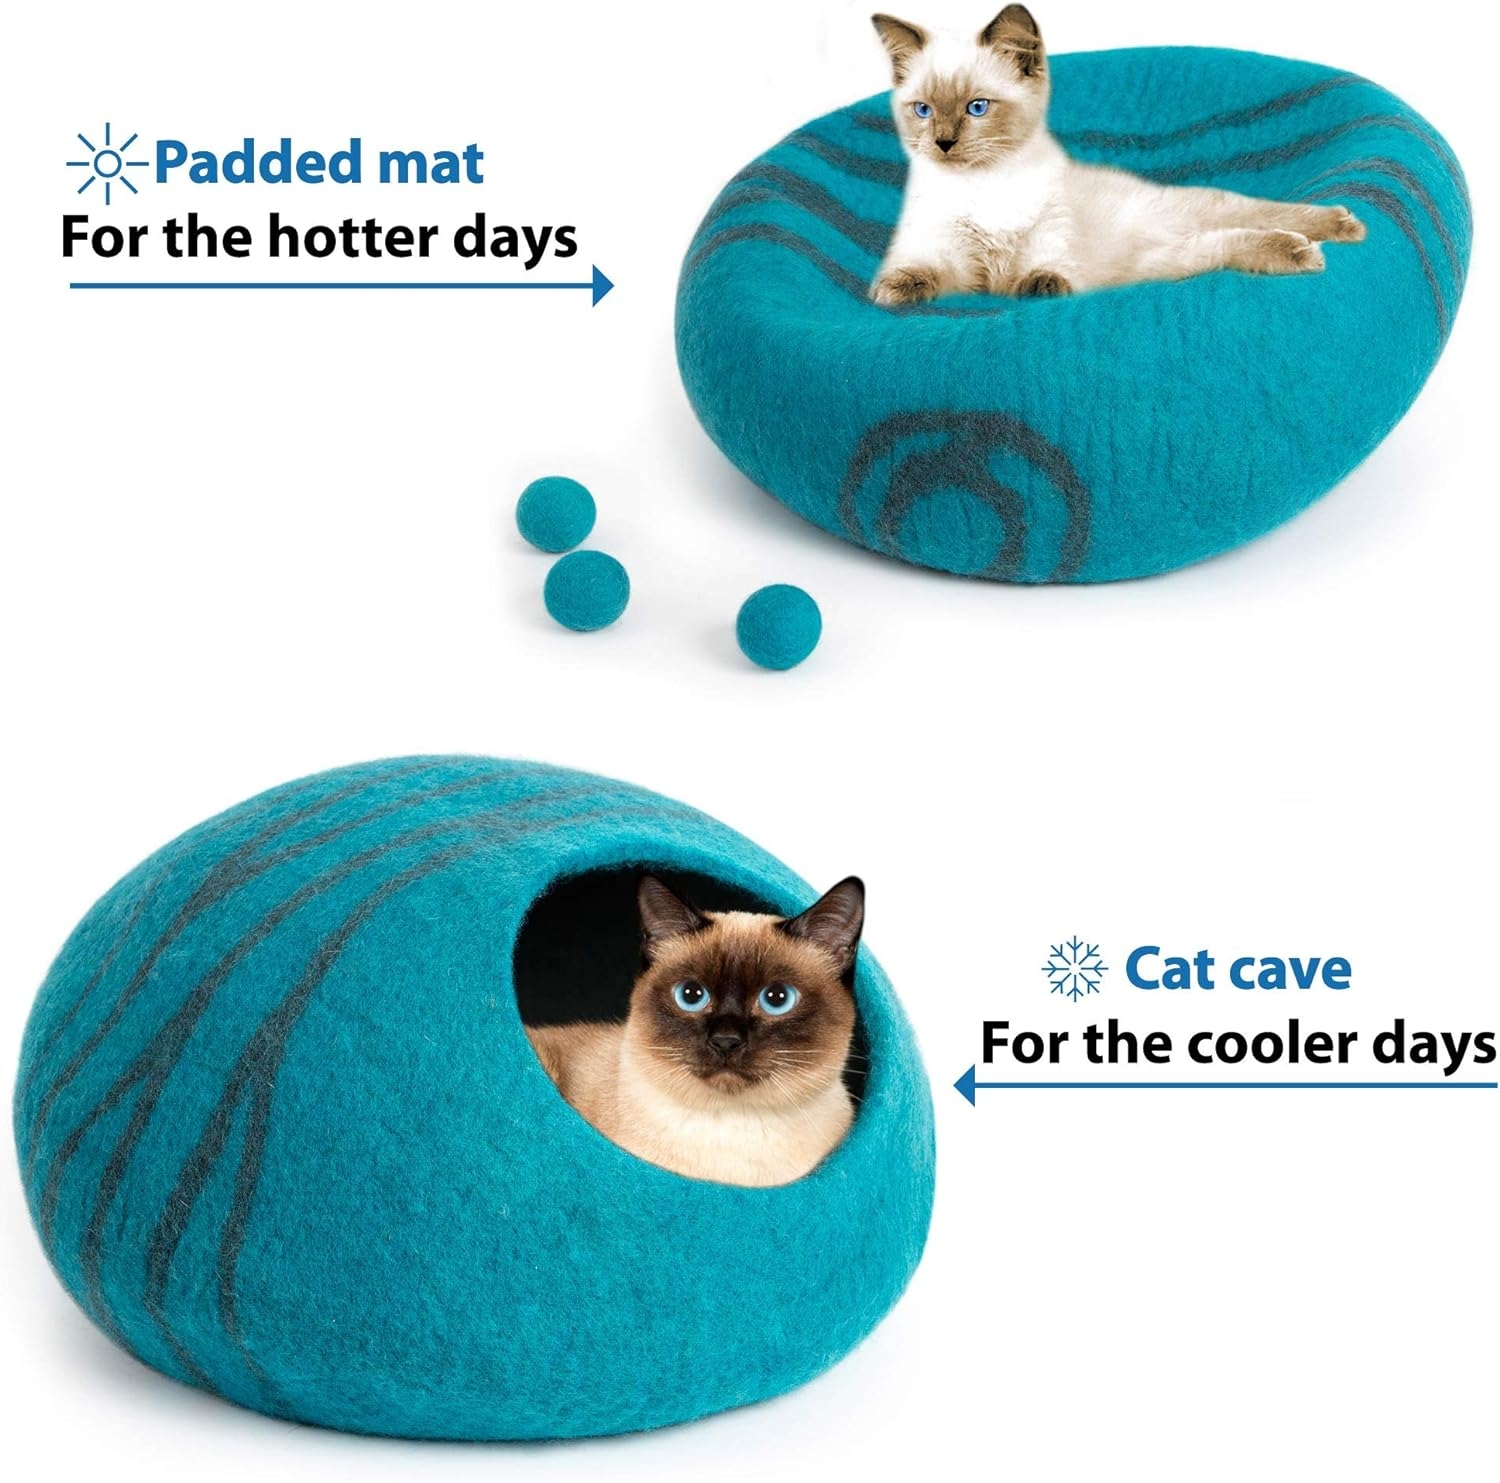 MEOWFIA Premium Felt Cat Bed Cave (Medium) - Handmade 100% Merino Wool Bed for Cats and Kittens